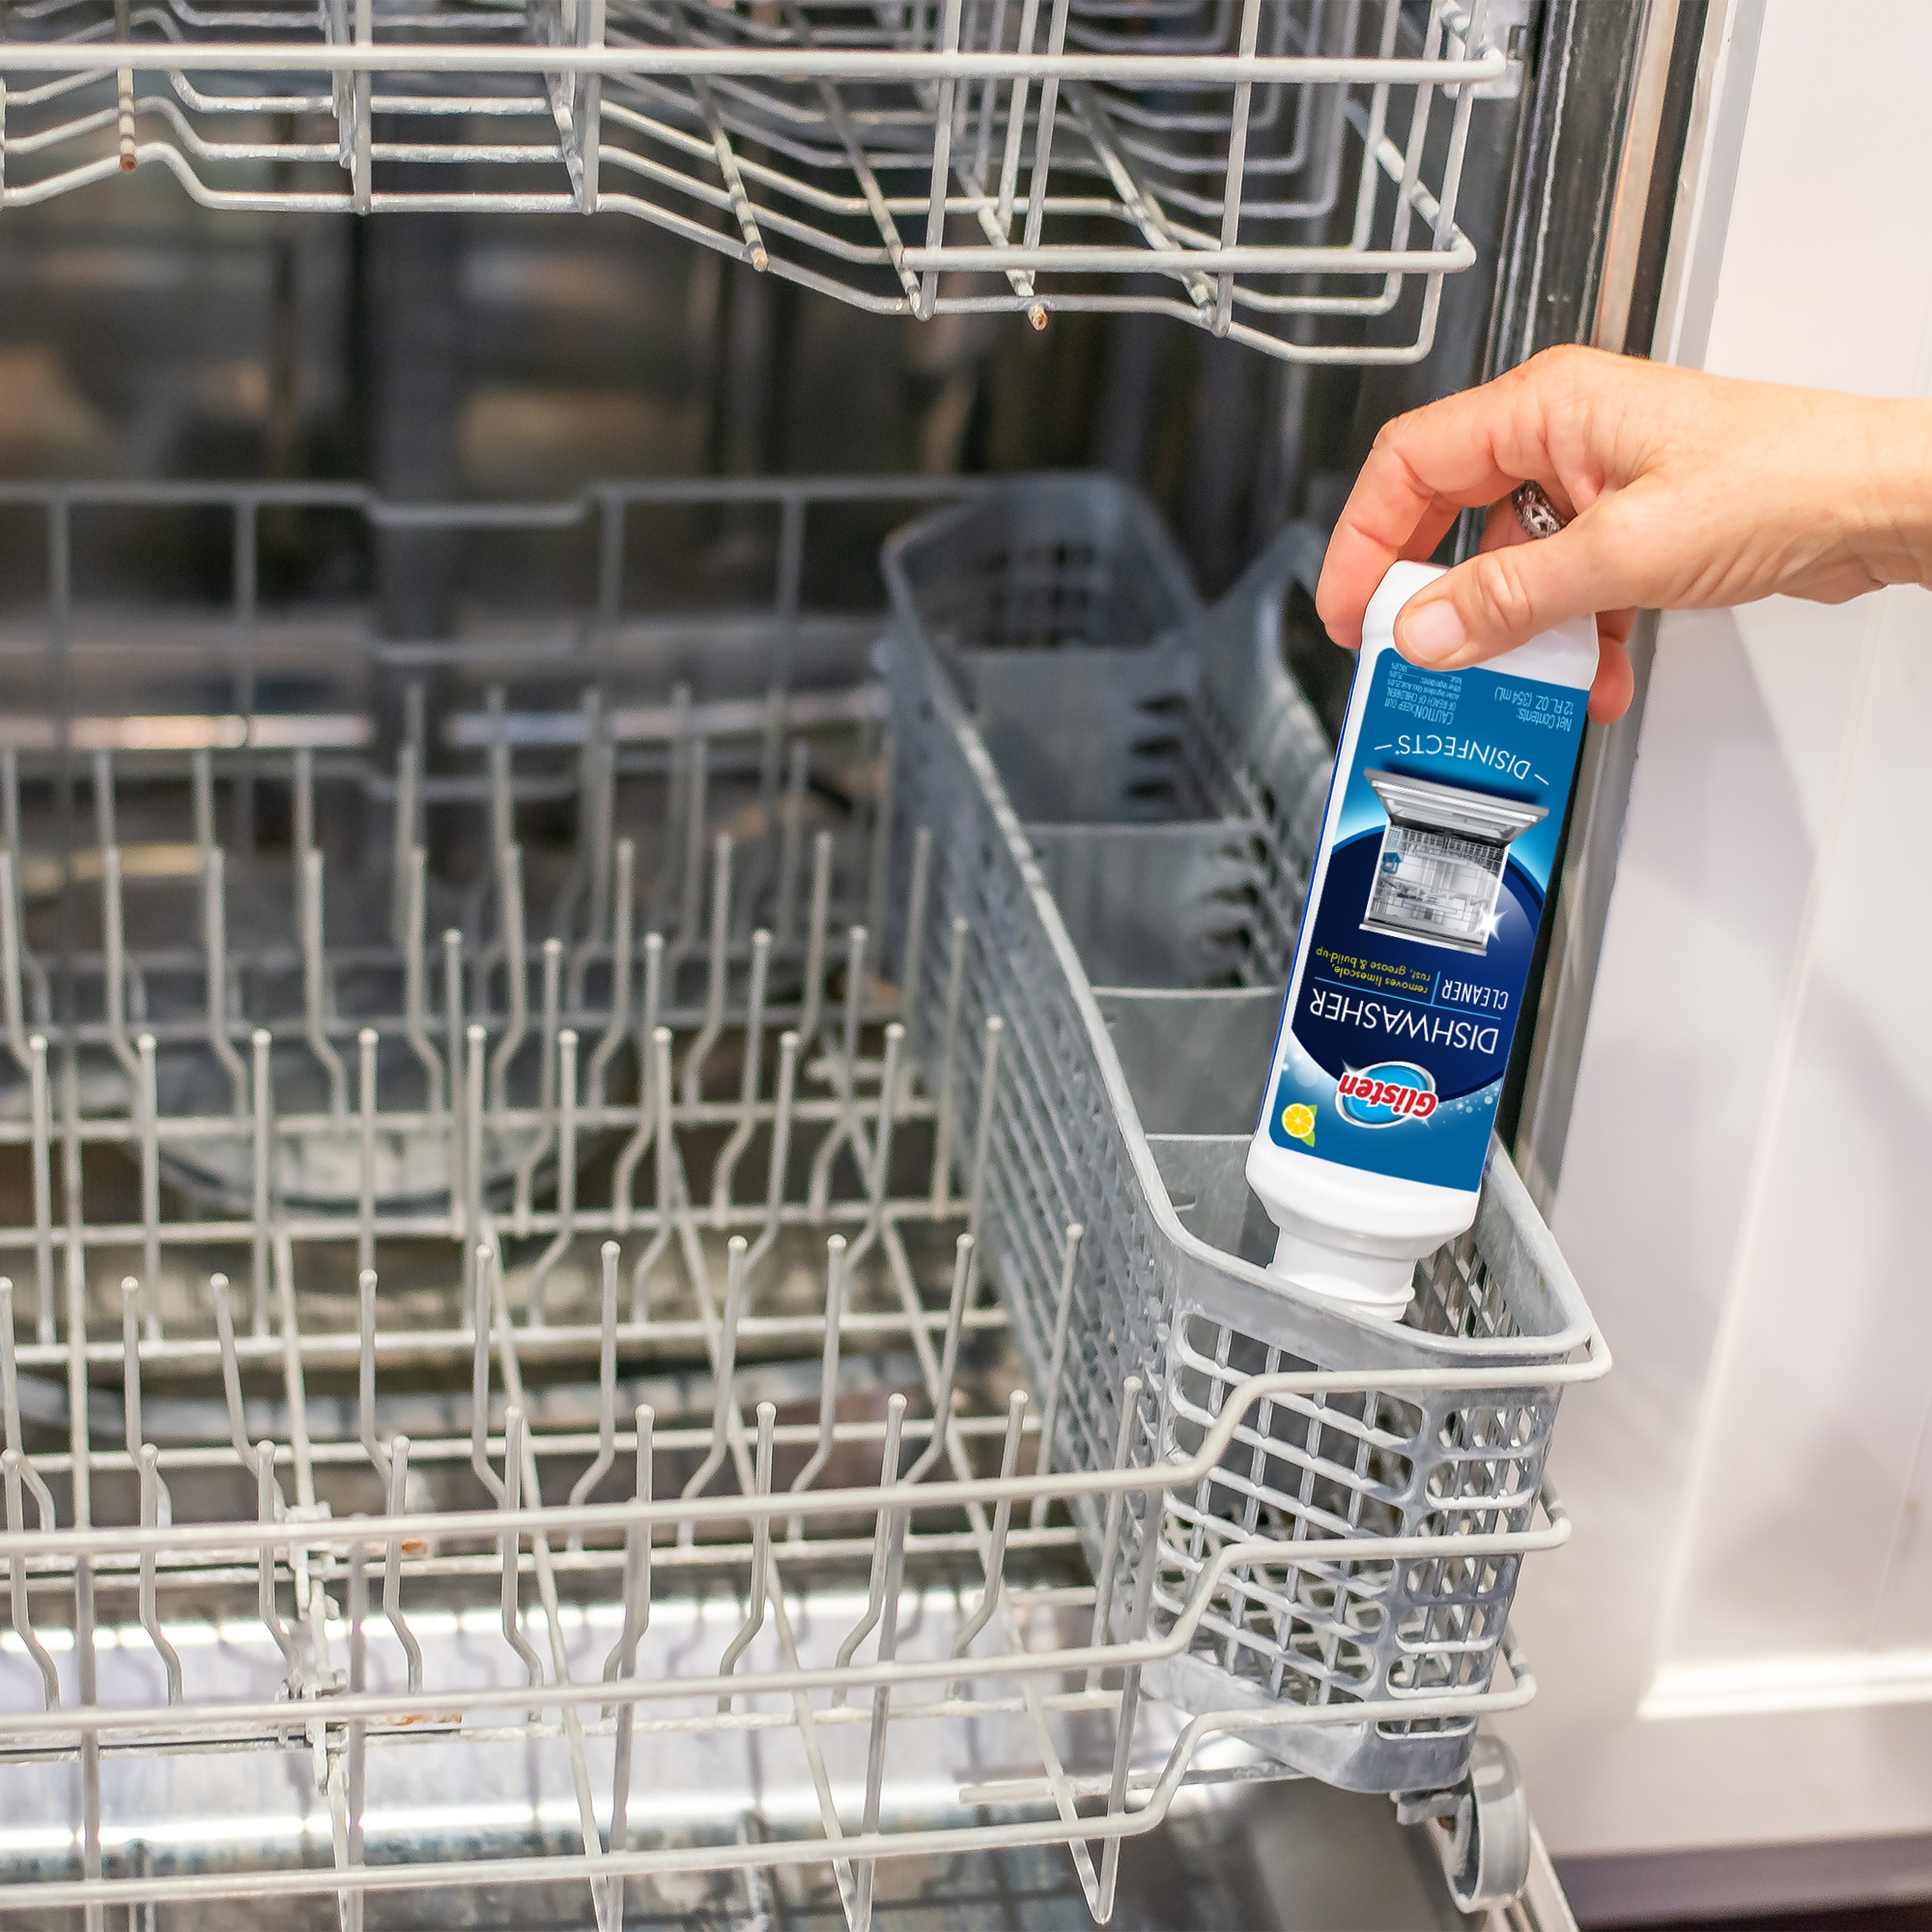 GLISTEN 12-oz Liquid Dishwasher Cleaner in the Dishwasher Cleaners